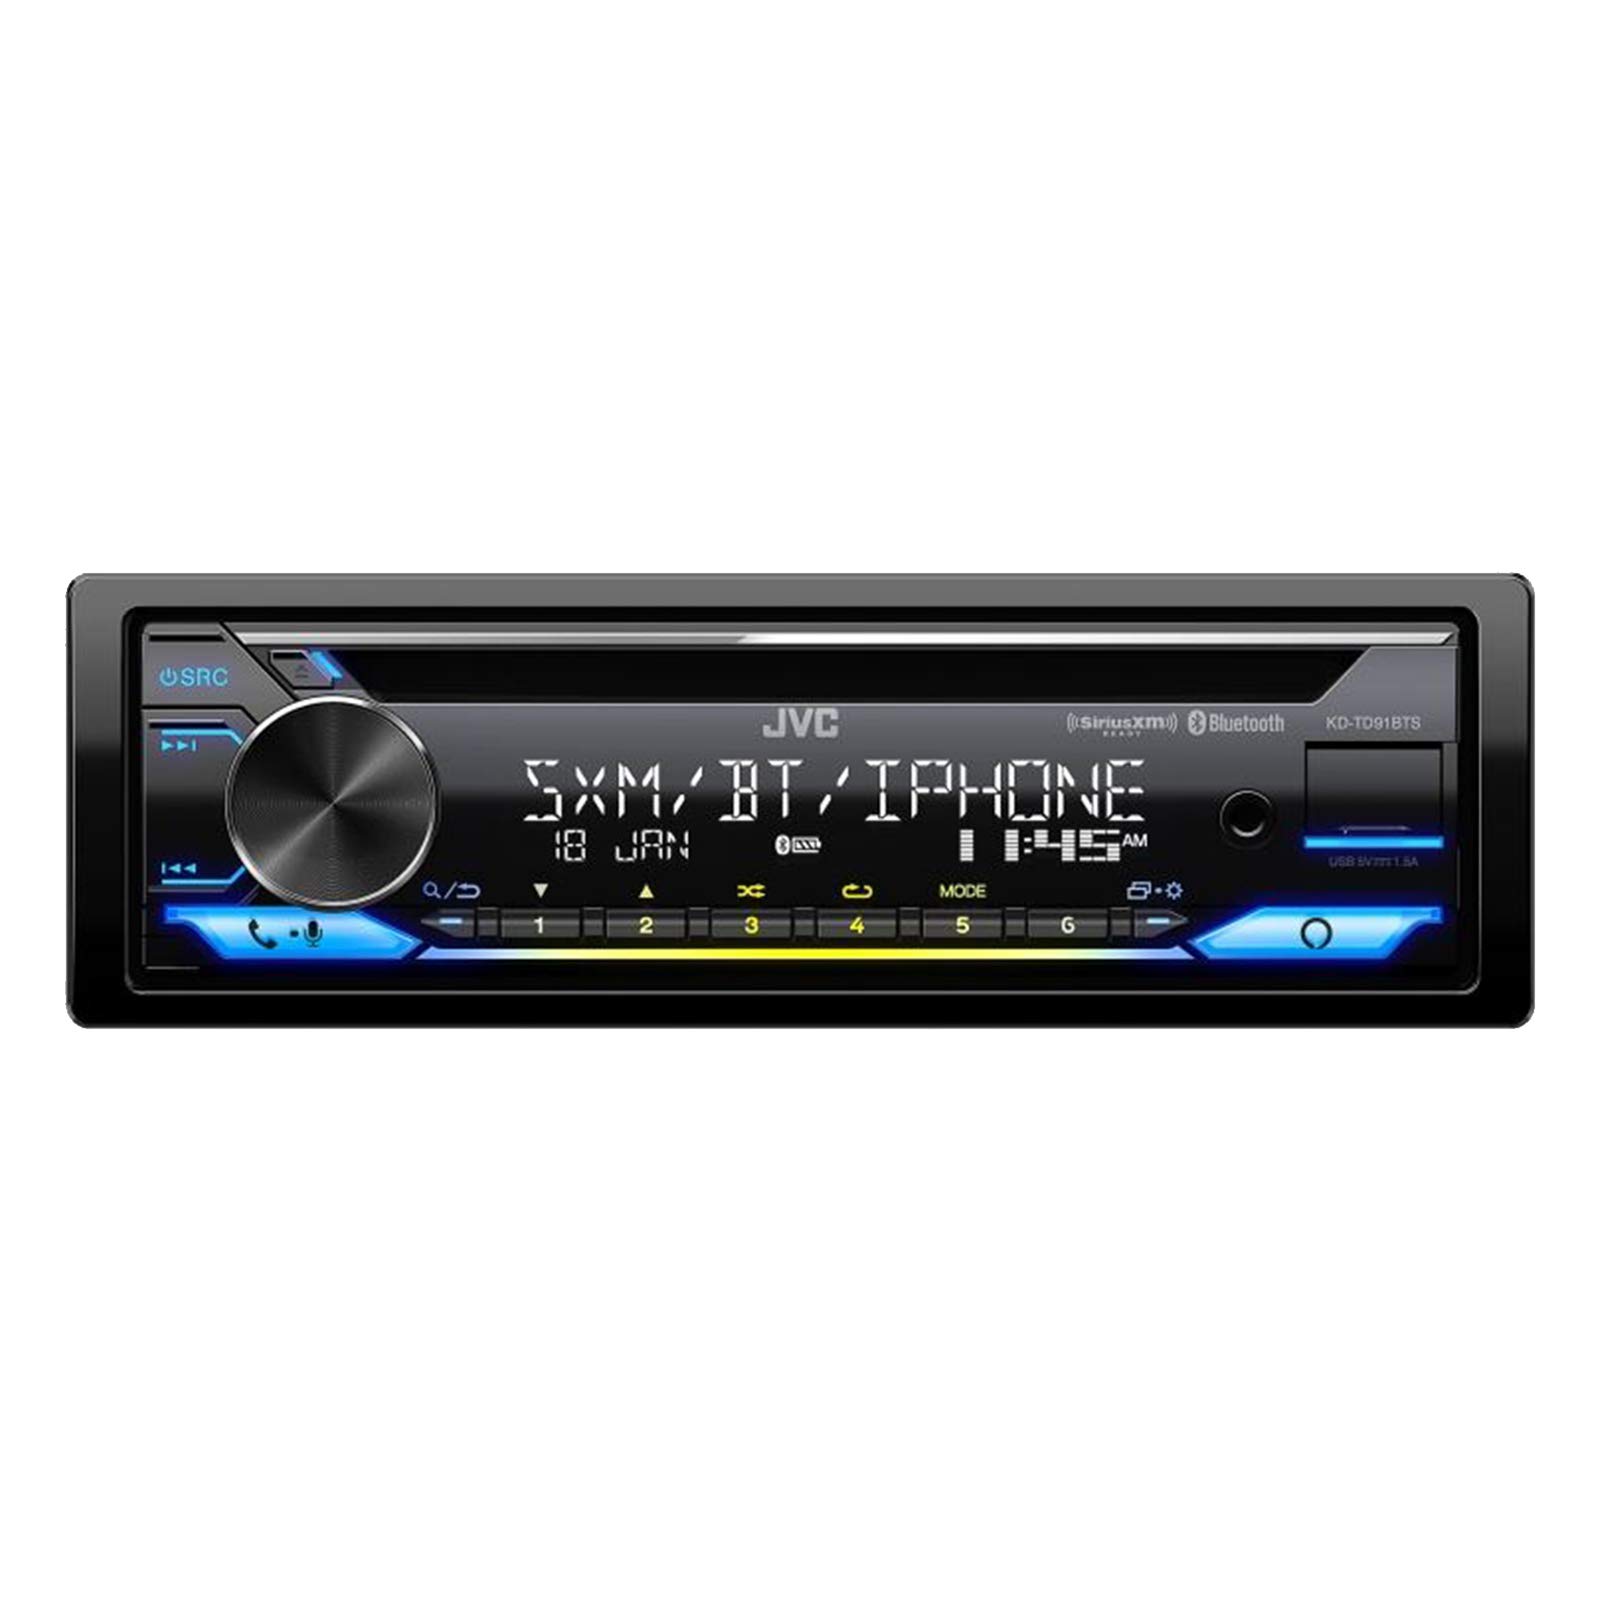 JVC KD-TD91BTS 蓝牙汽车立体声接收器，带 USB 端口 2 行 LCD 显示屏、AM/FM 收音...